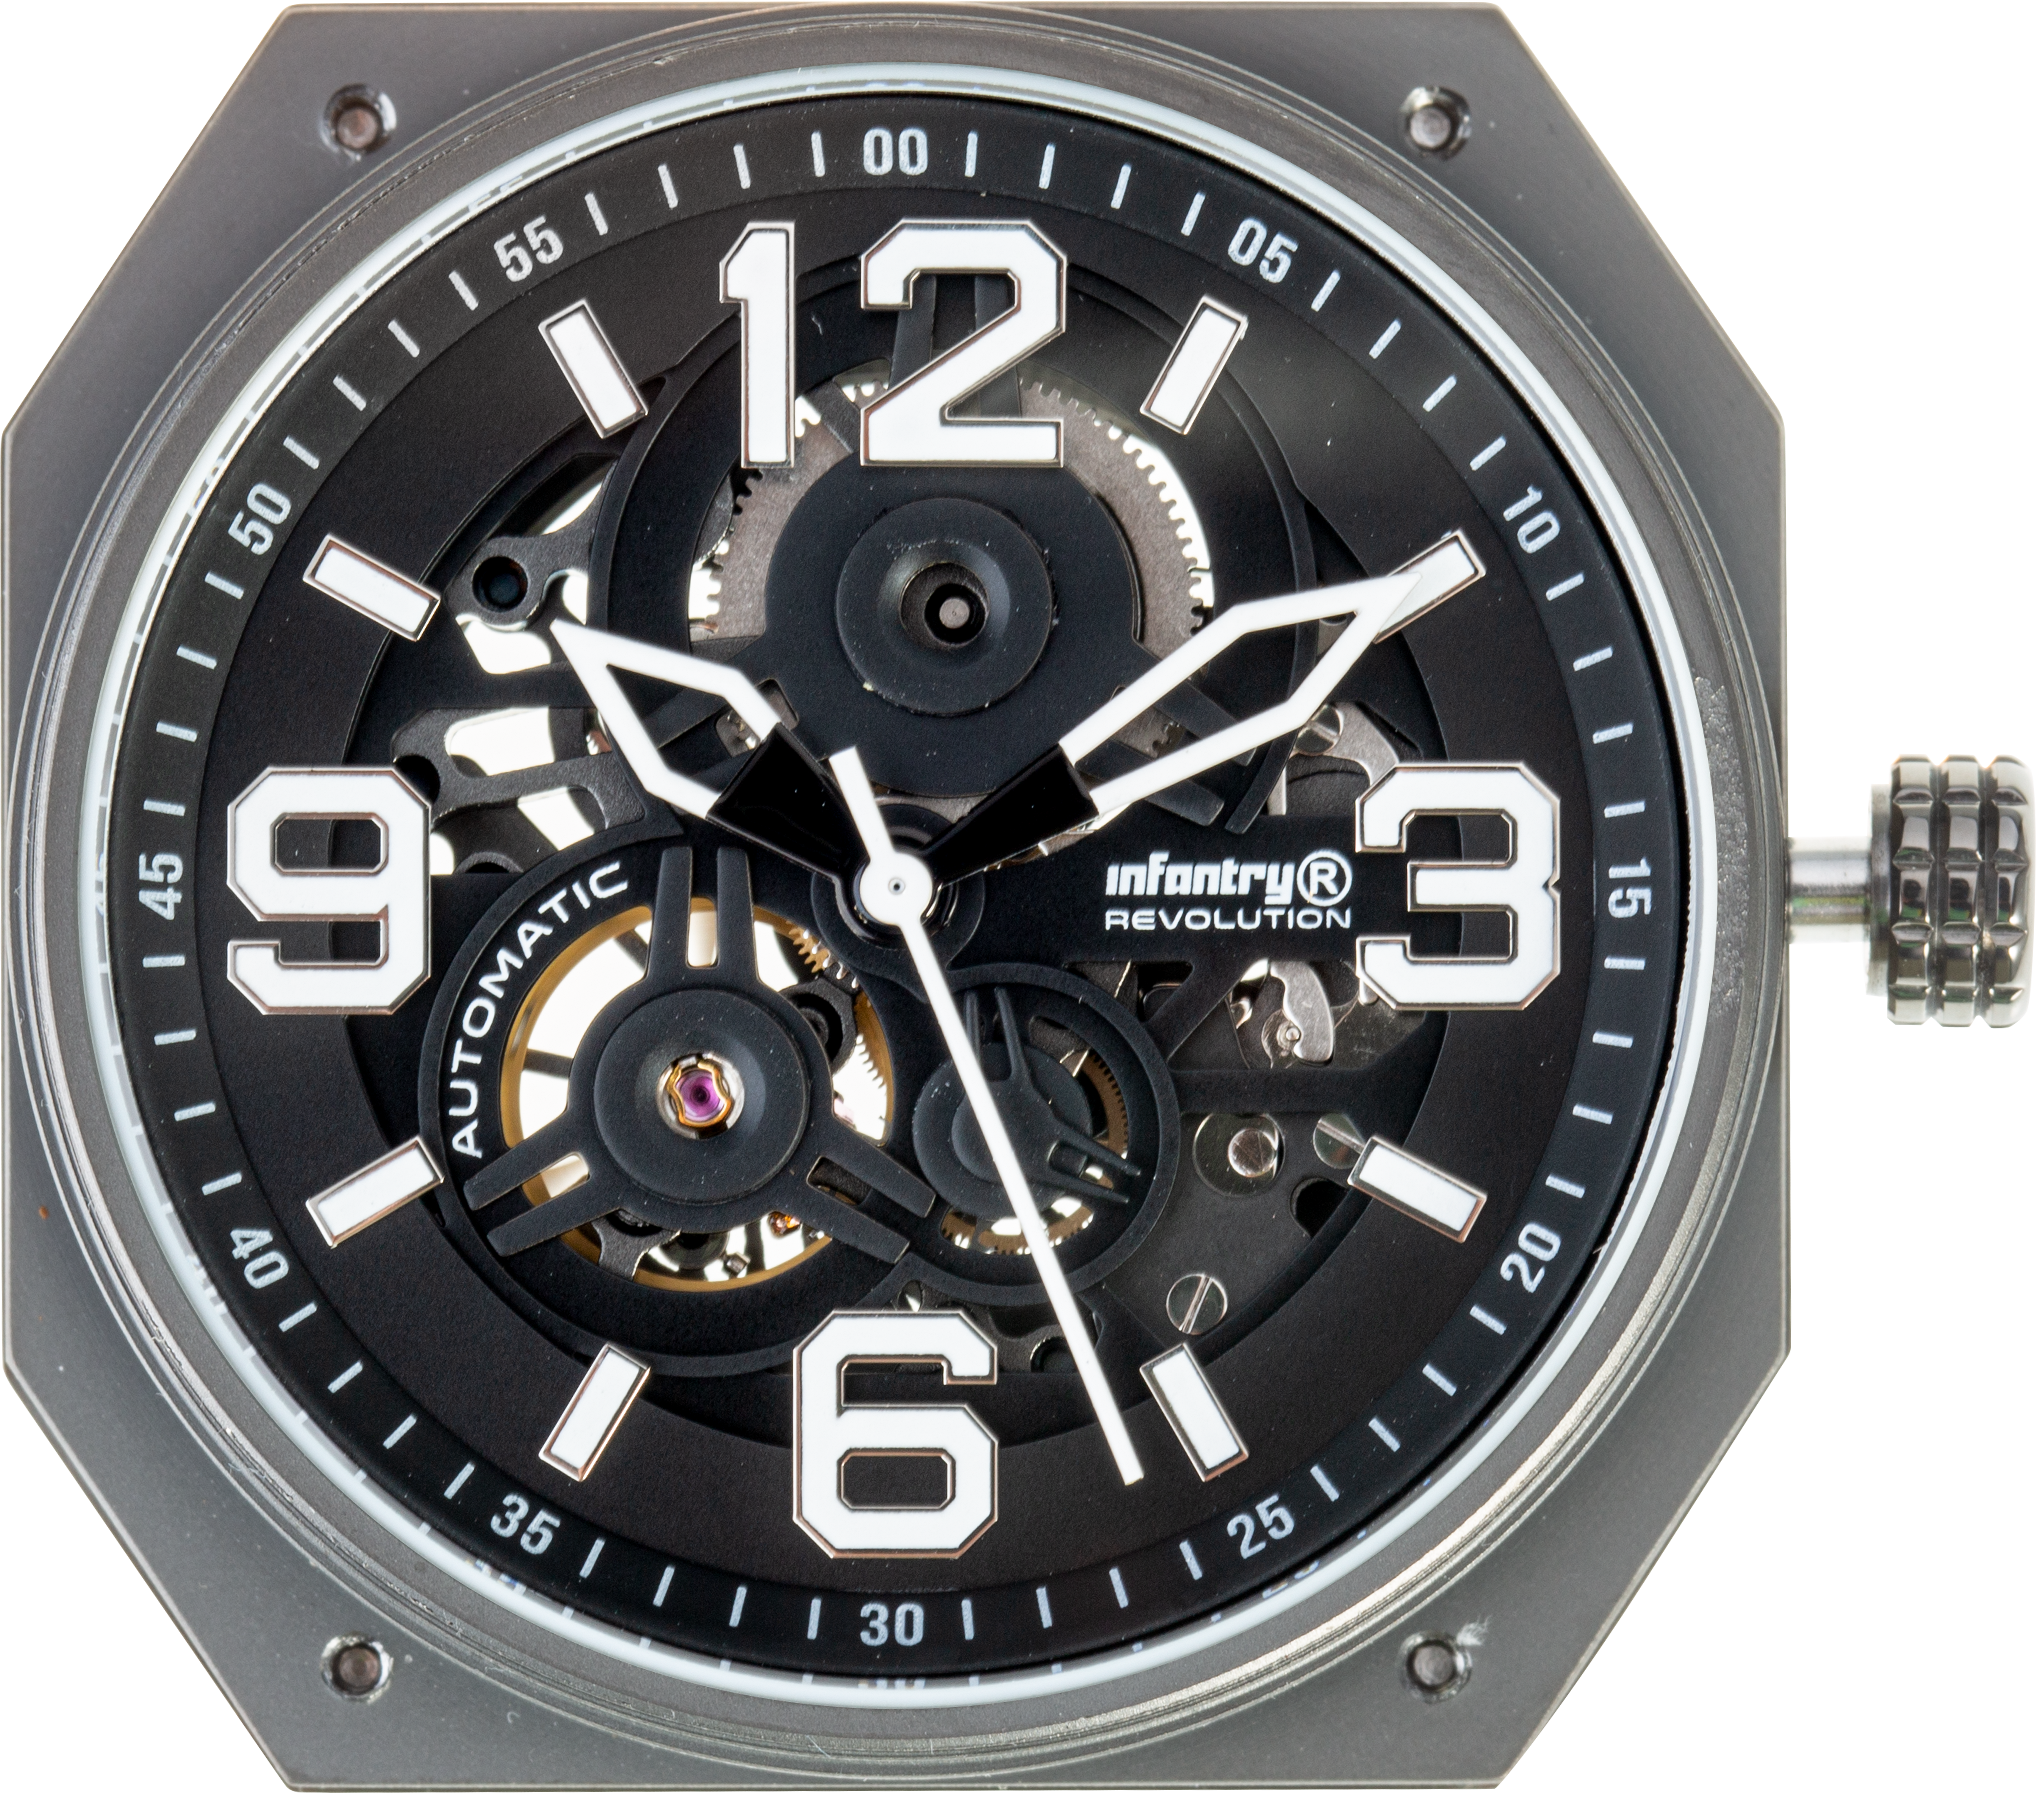 MOD 47 - watch movement - black-and-white